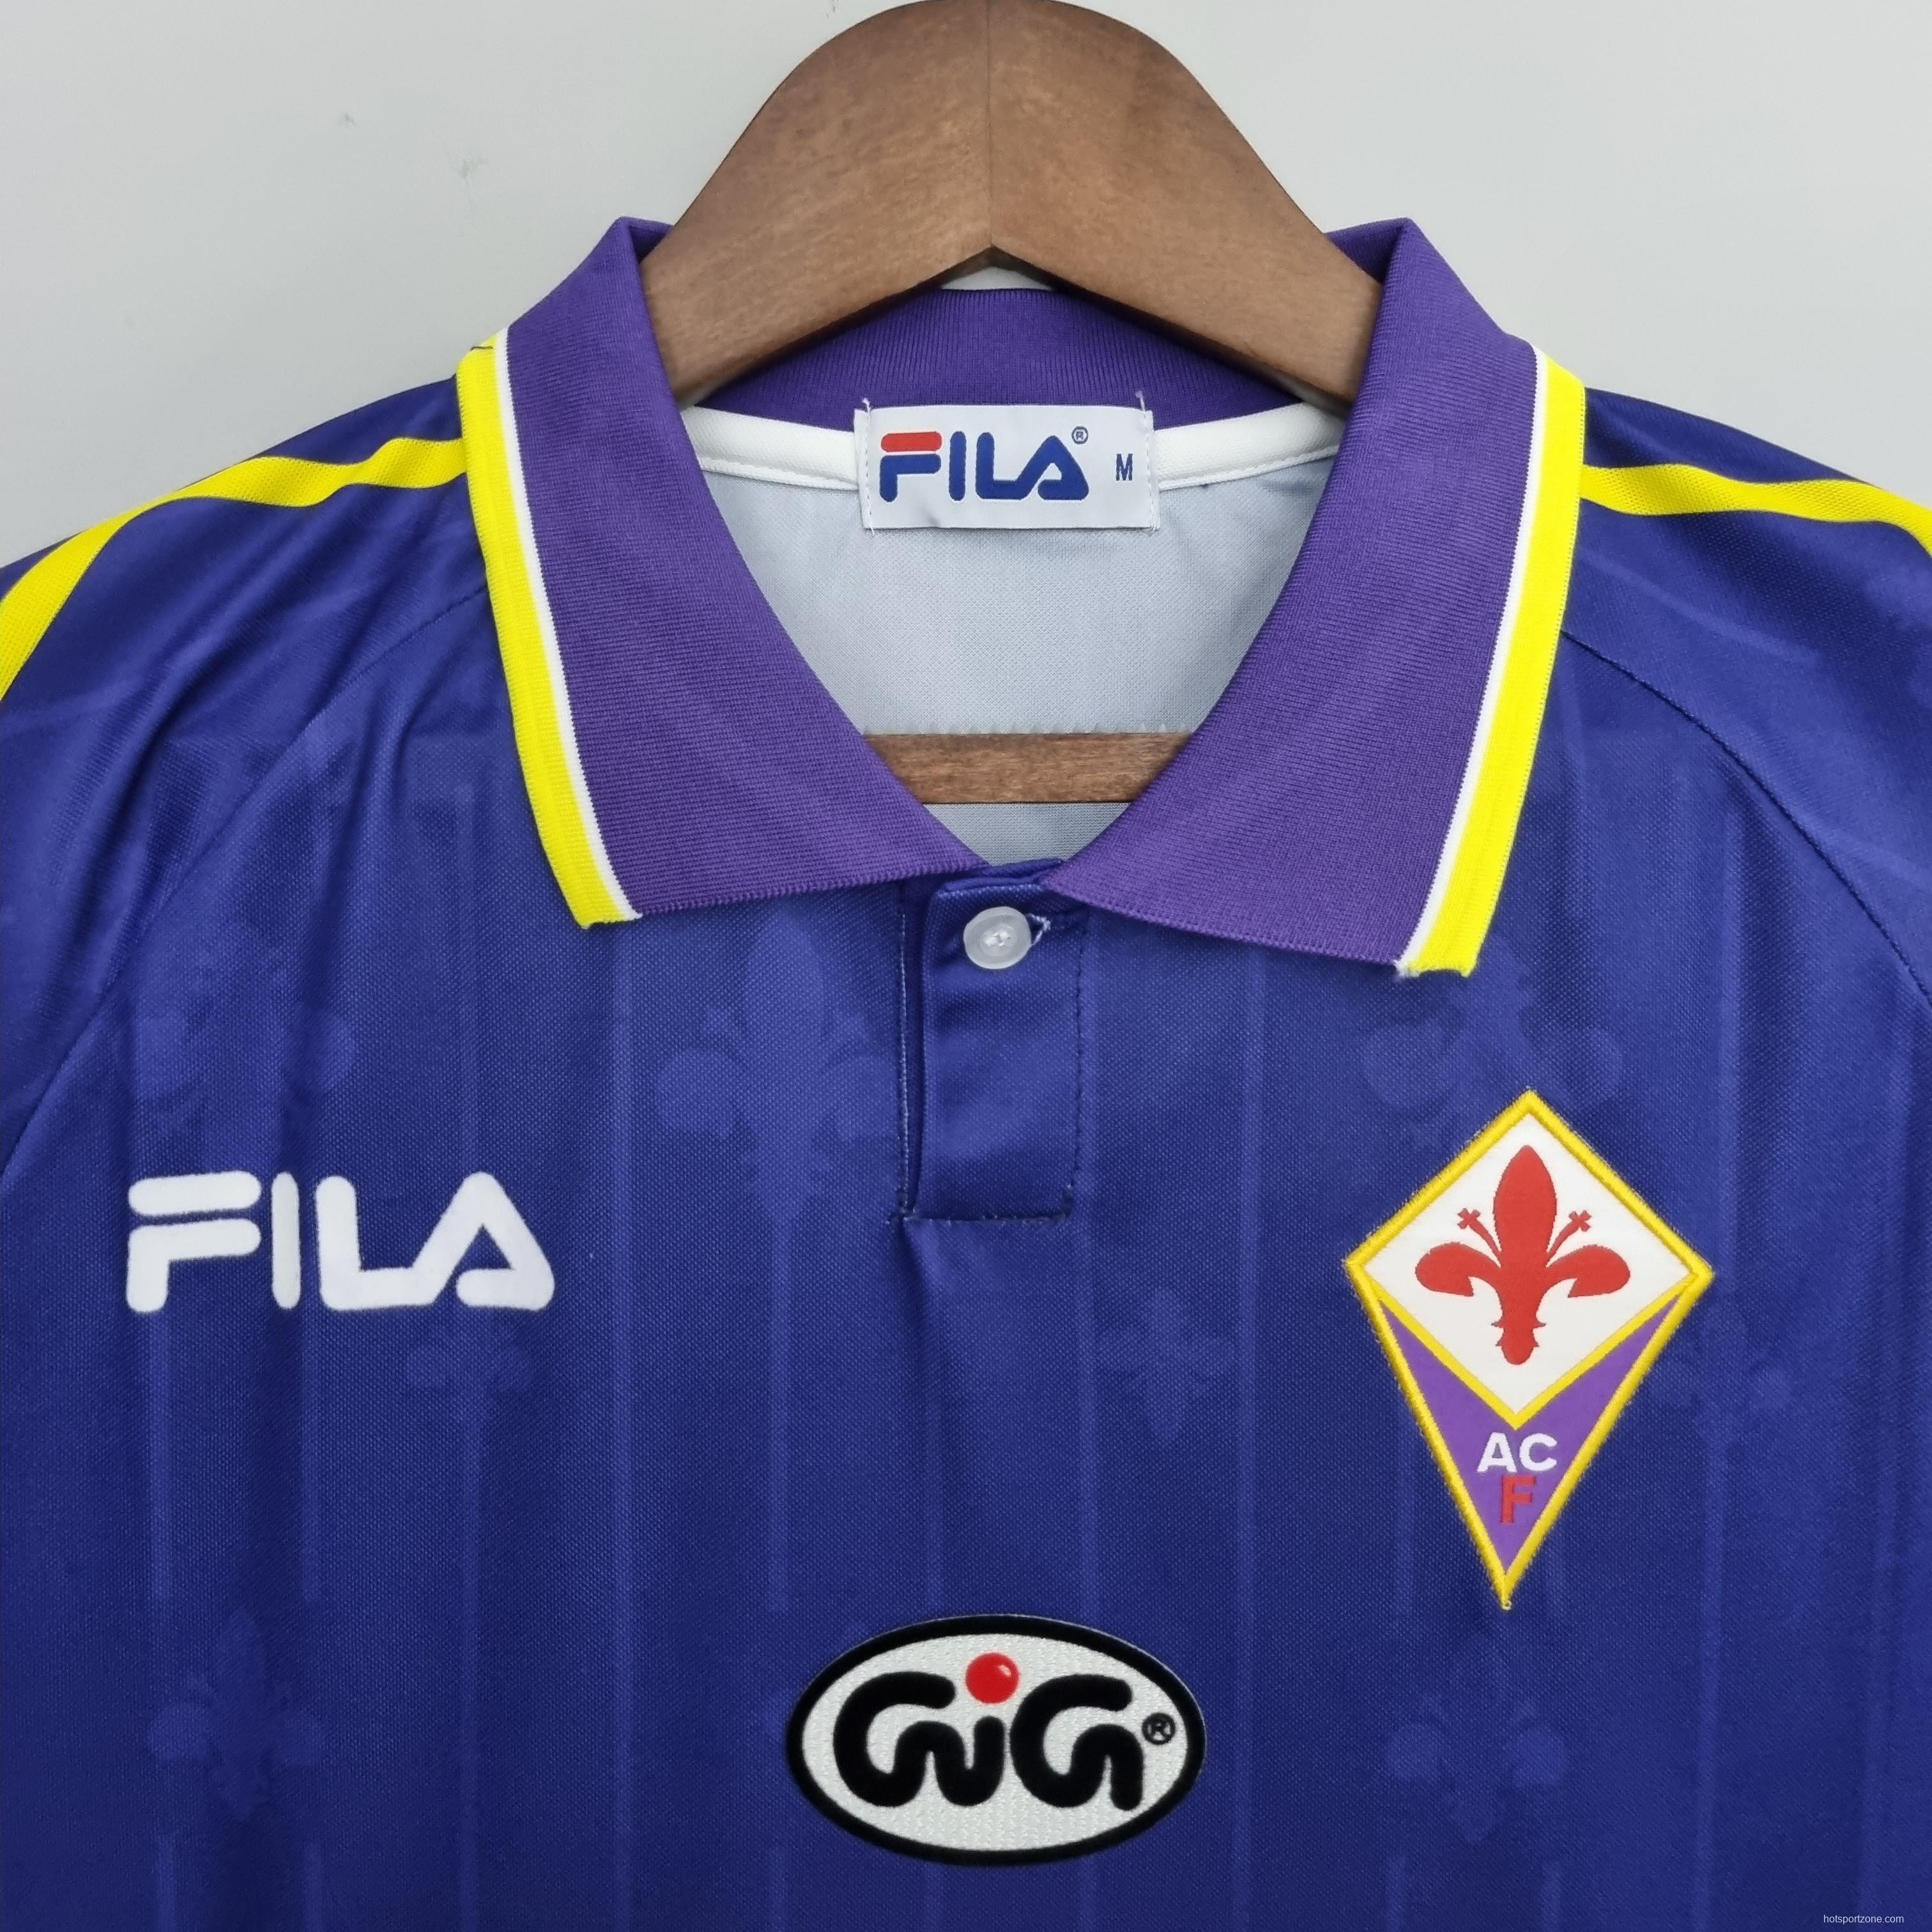 Retro Fiorentina 97/98 home Soccer Jersey